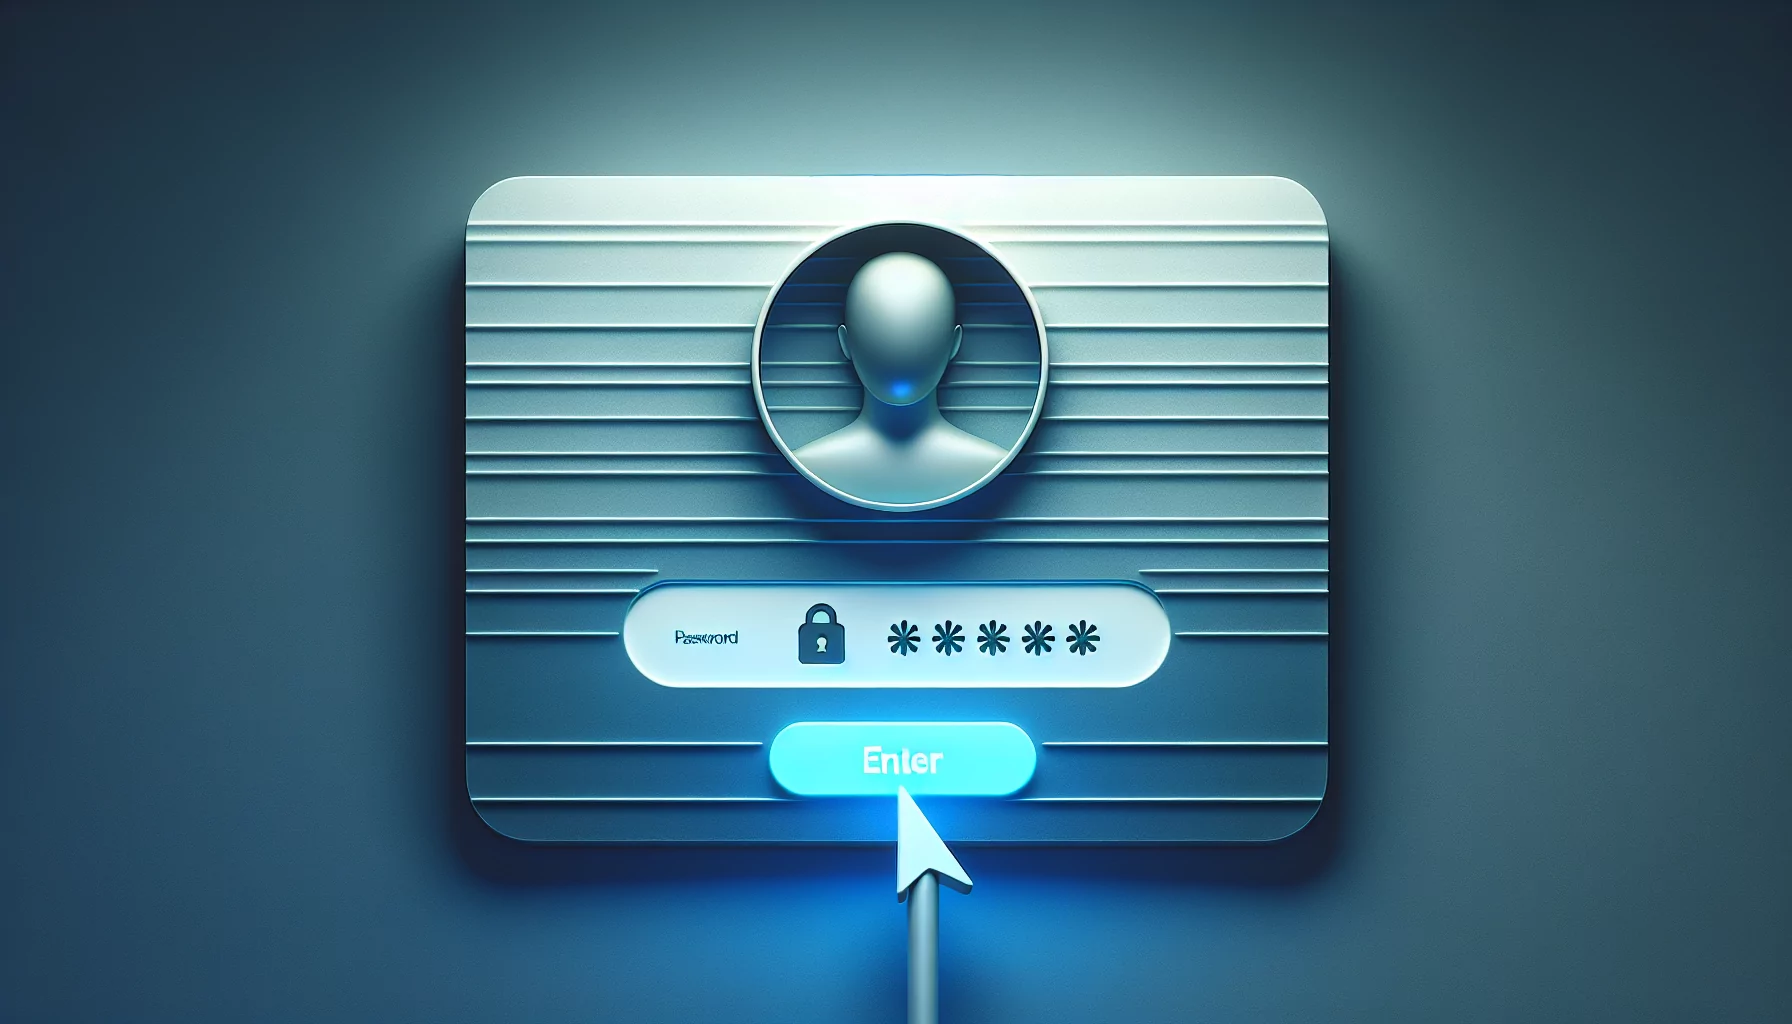 Mac login screen with password prompt